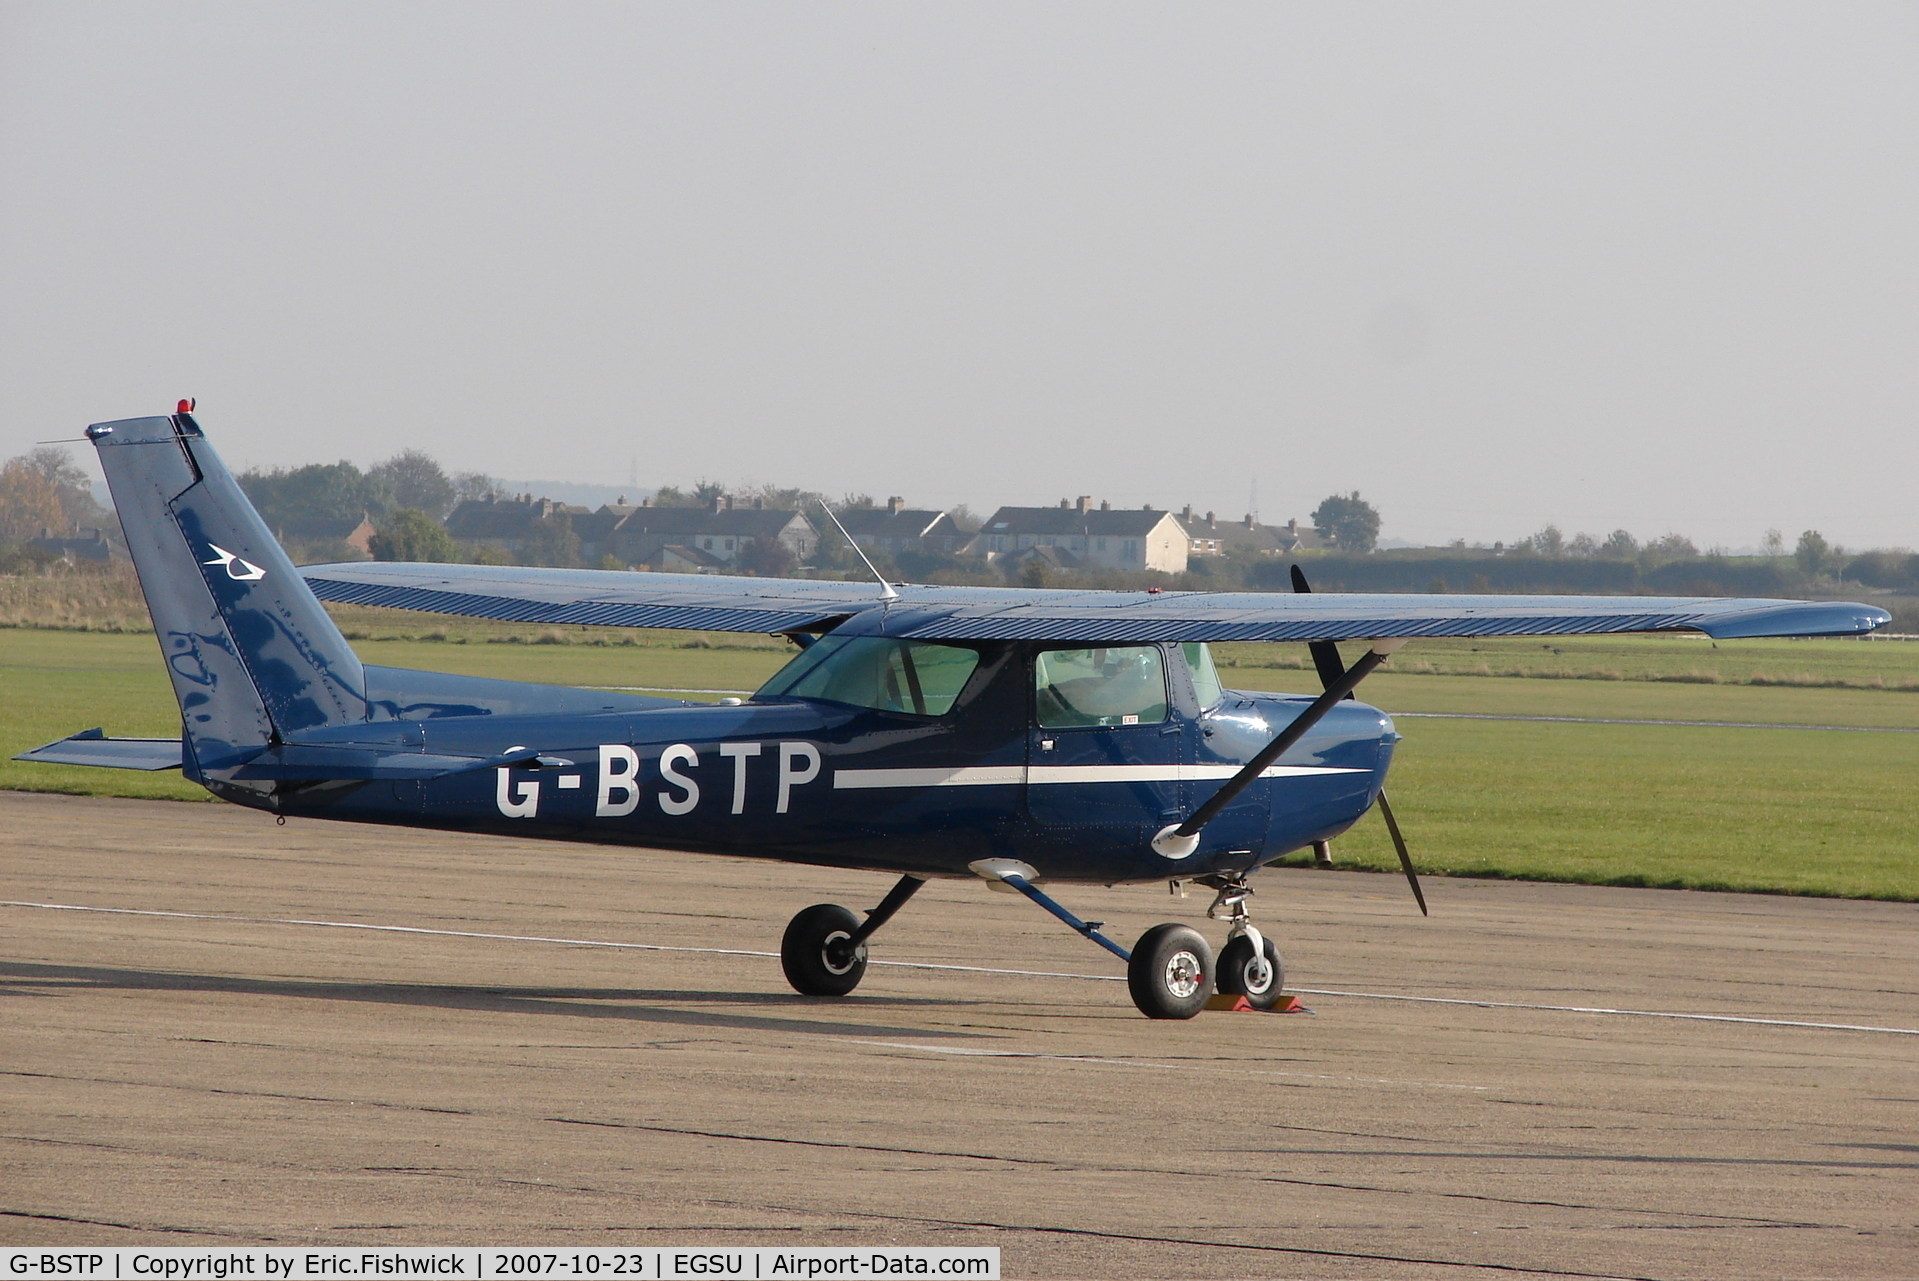 G-BSTP, 1978 Cessna 152 C/N 152-82925, 2. G-BSTP at Duxford